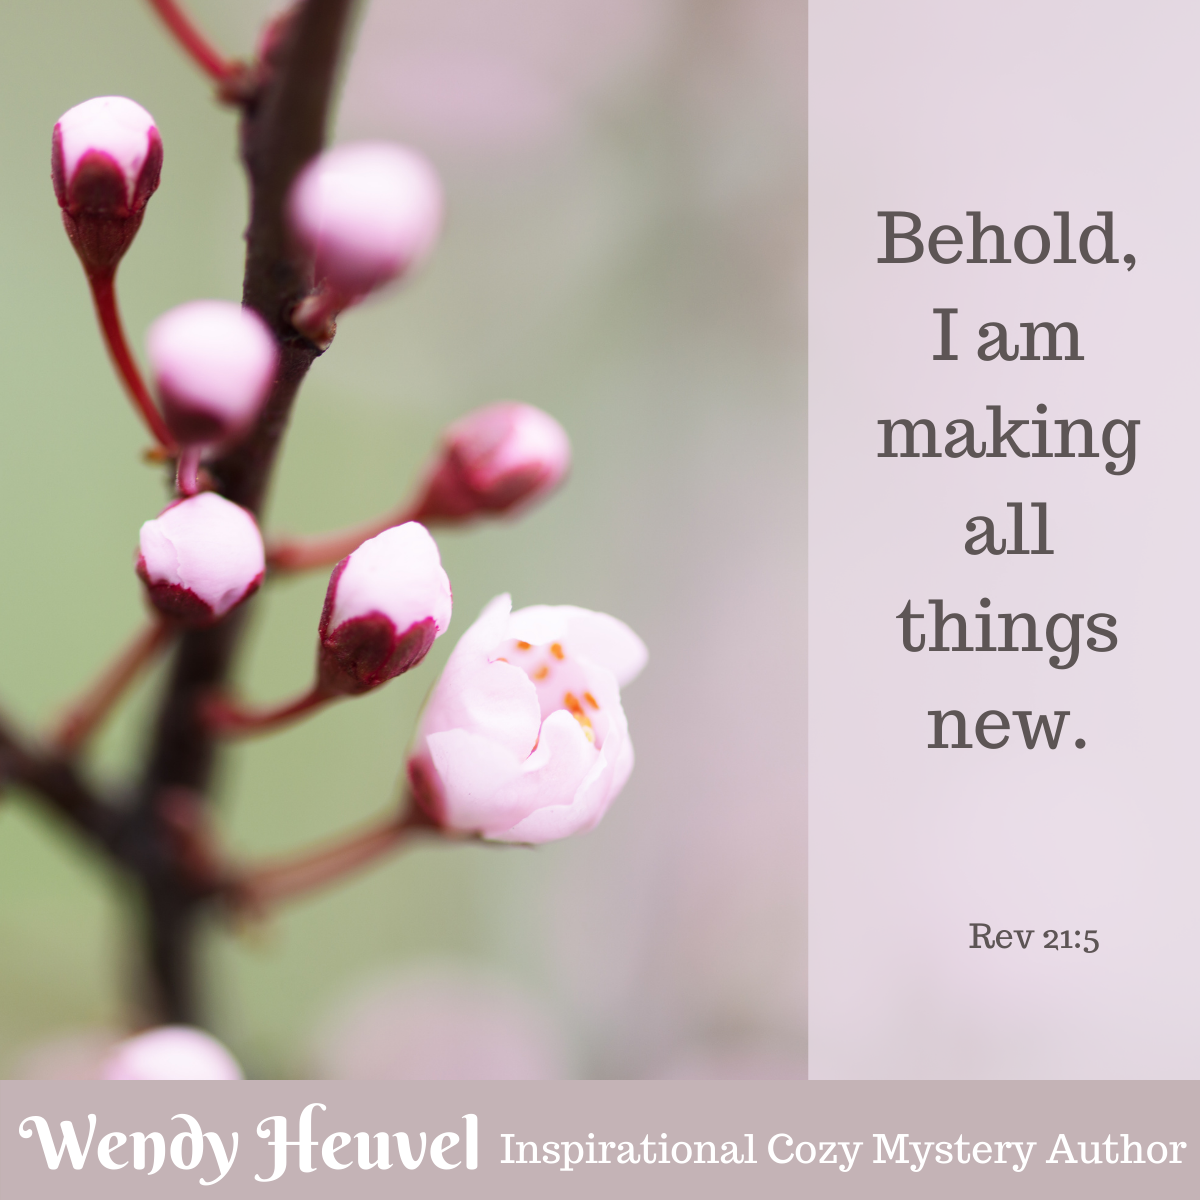 Rev 21:5 – All Things new